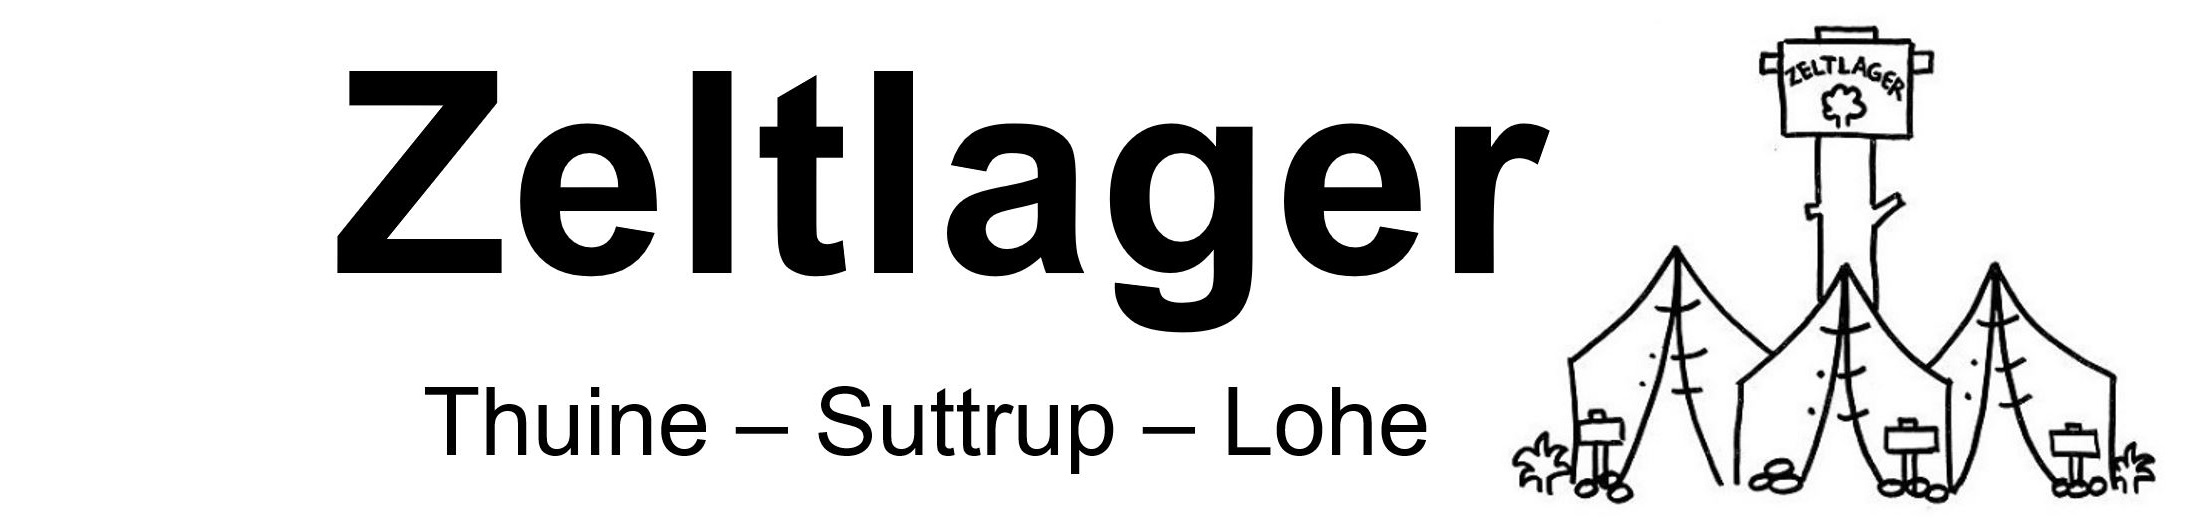 Zeltlager Thuine-Suttrup-Lohe